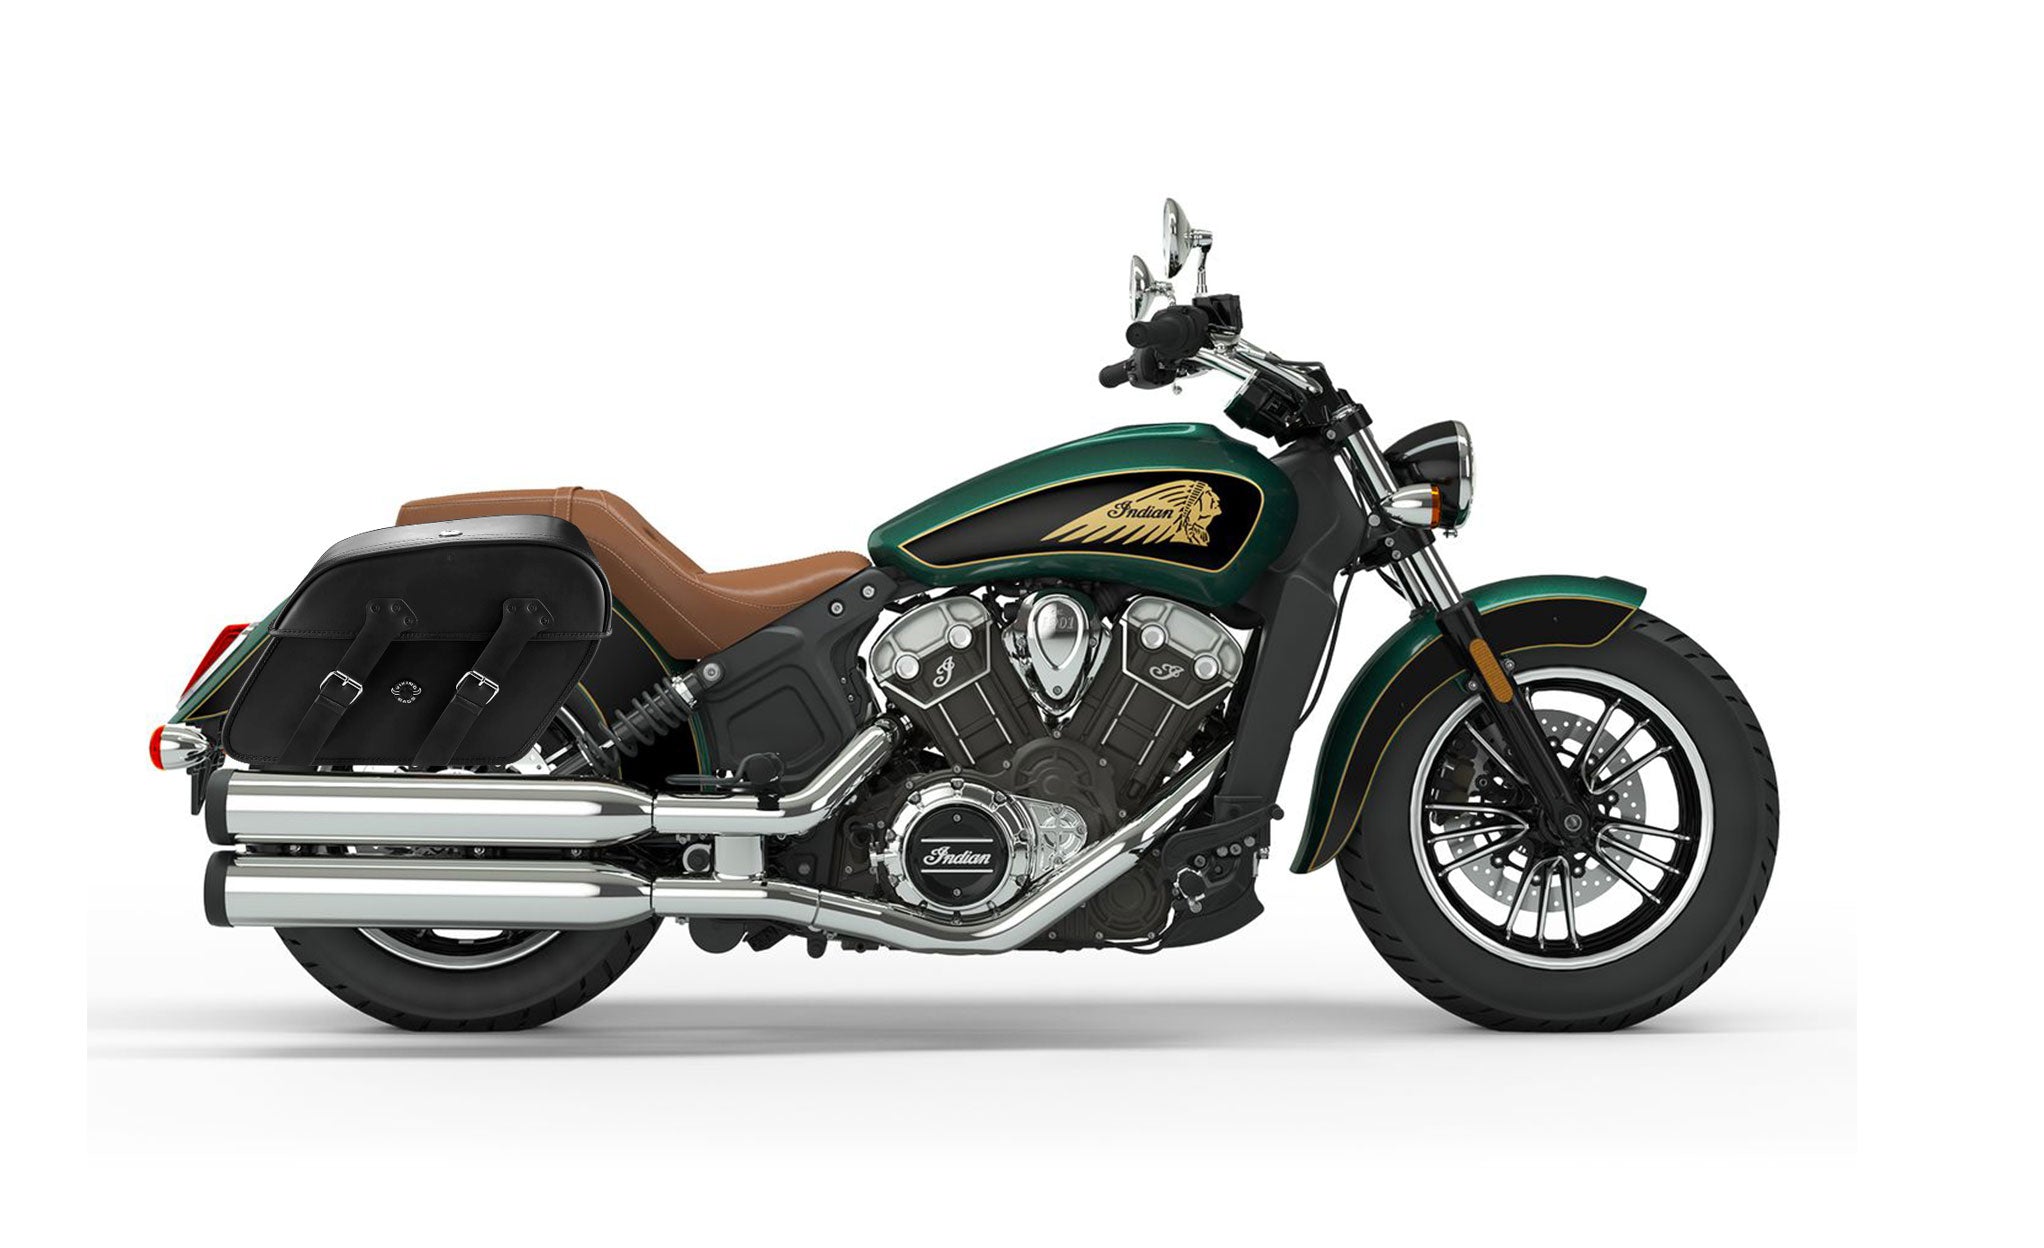 Viking Raven Extra Large Indian Scout Leather Motorcycle Saddlebags on Bike Photo @expand